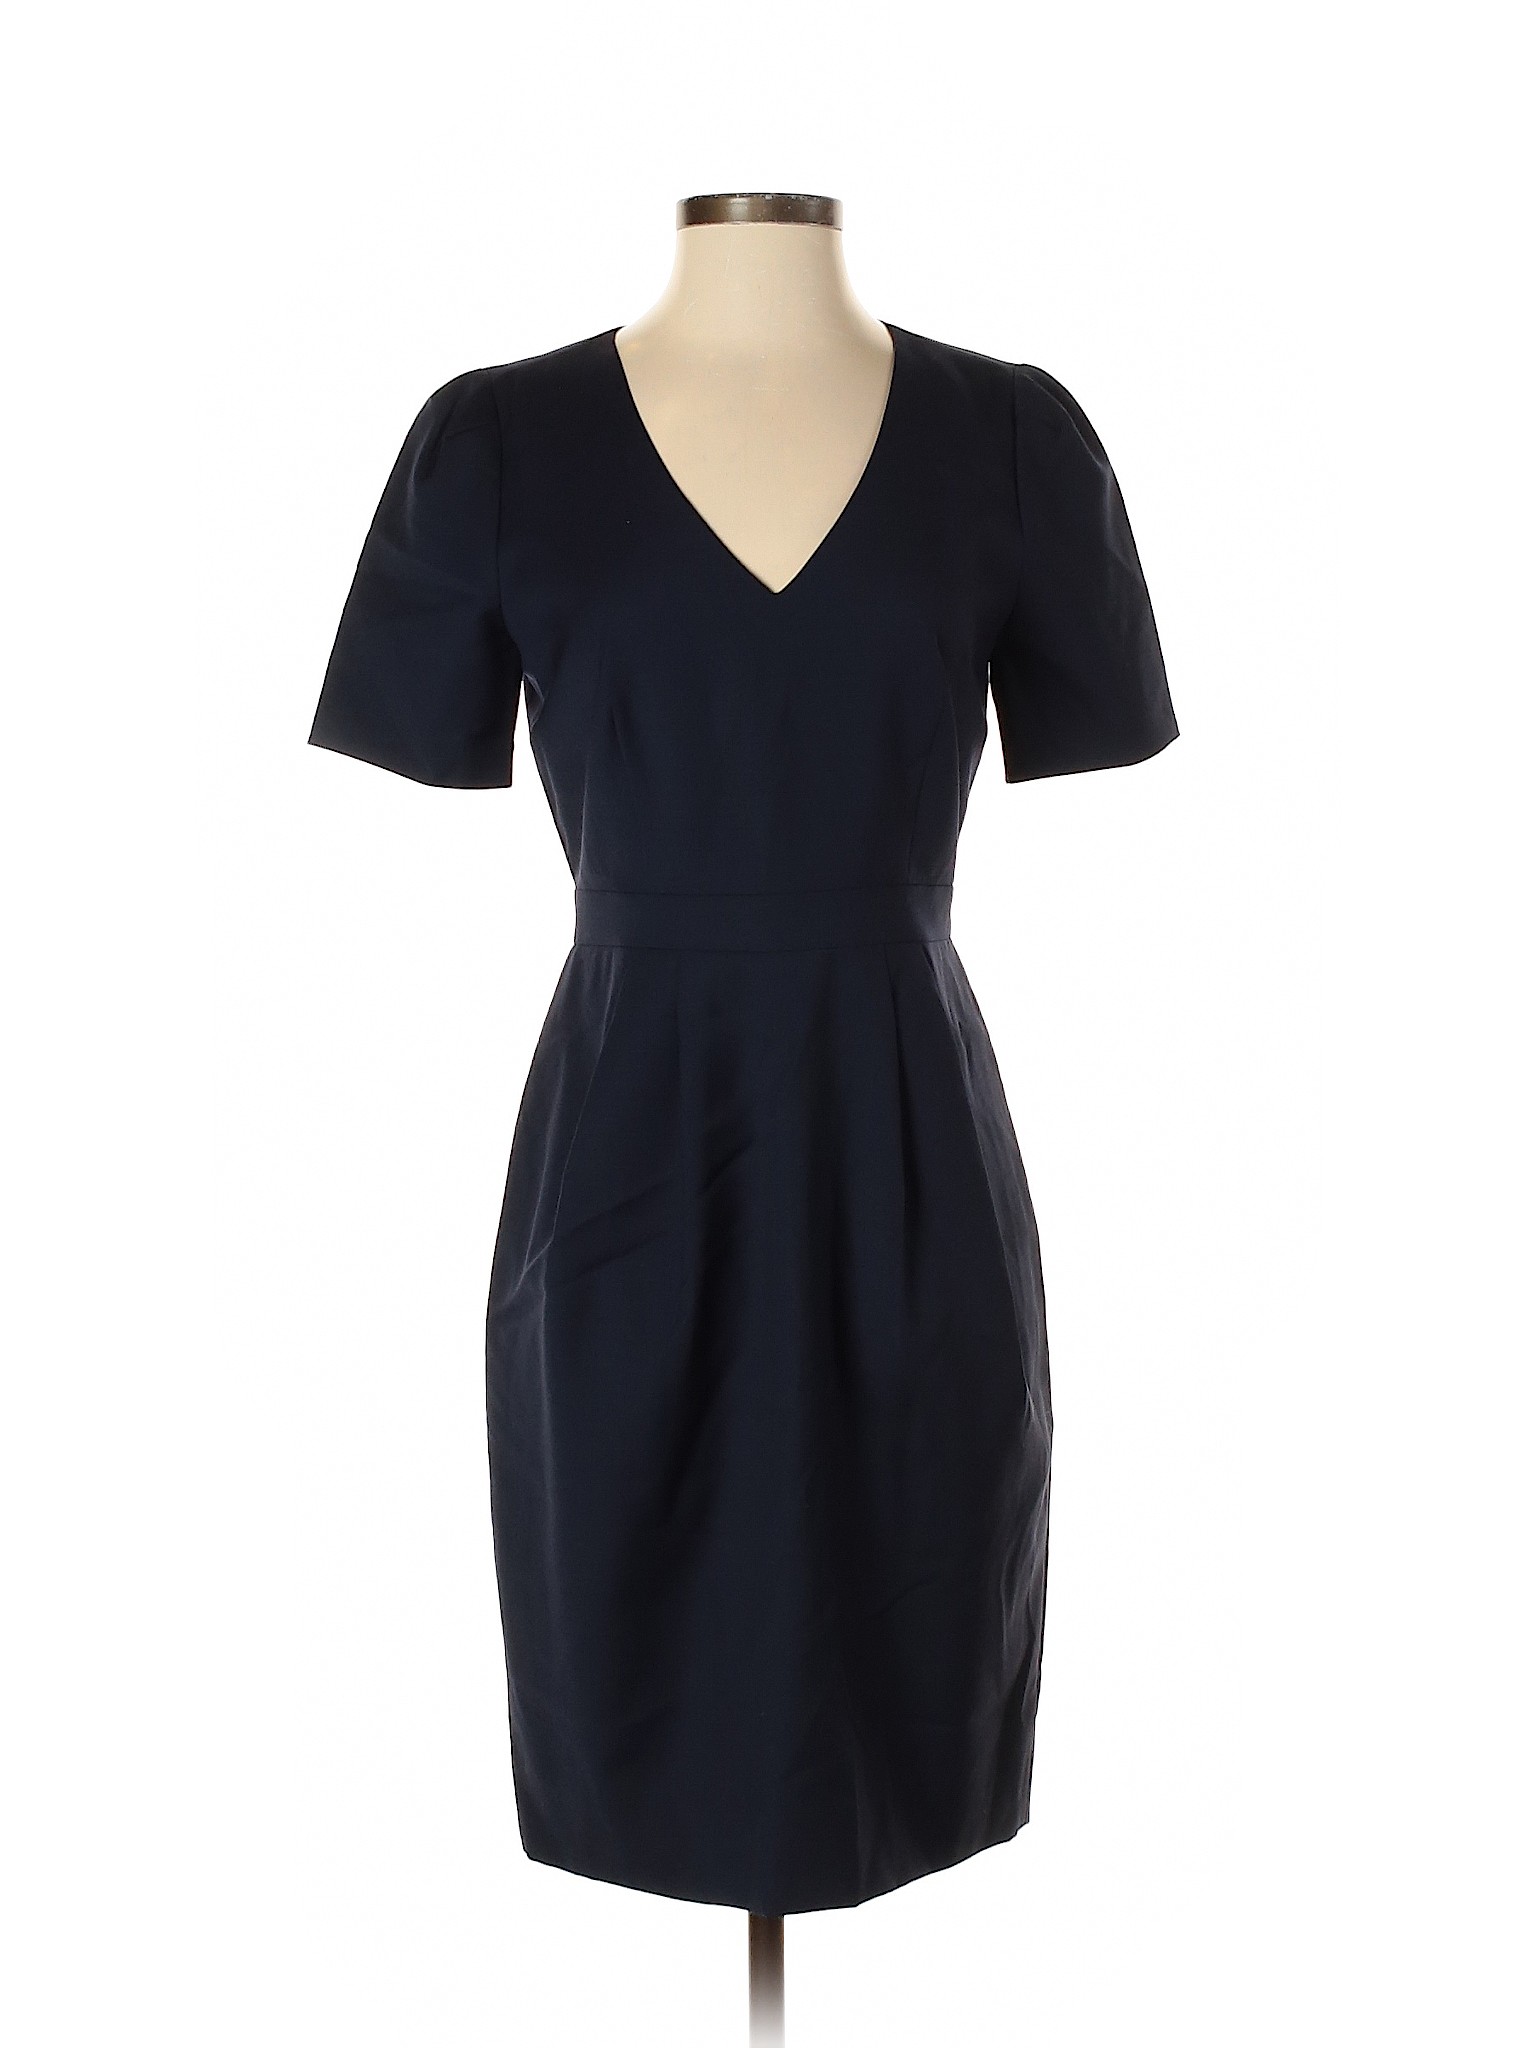 J.Crew Factory Store Women Black Casual Dress 2 | eBay